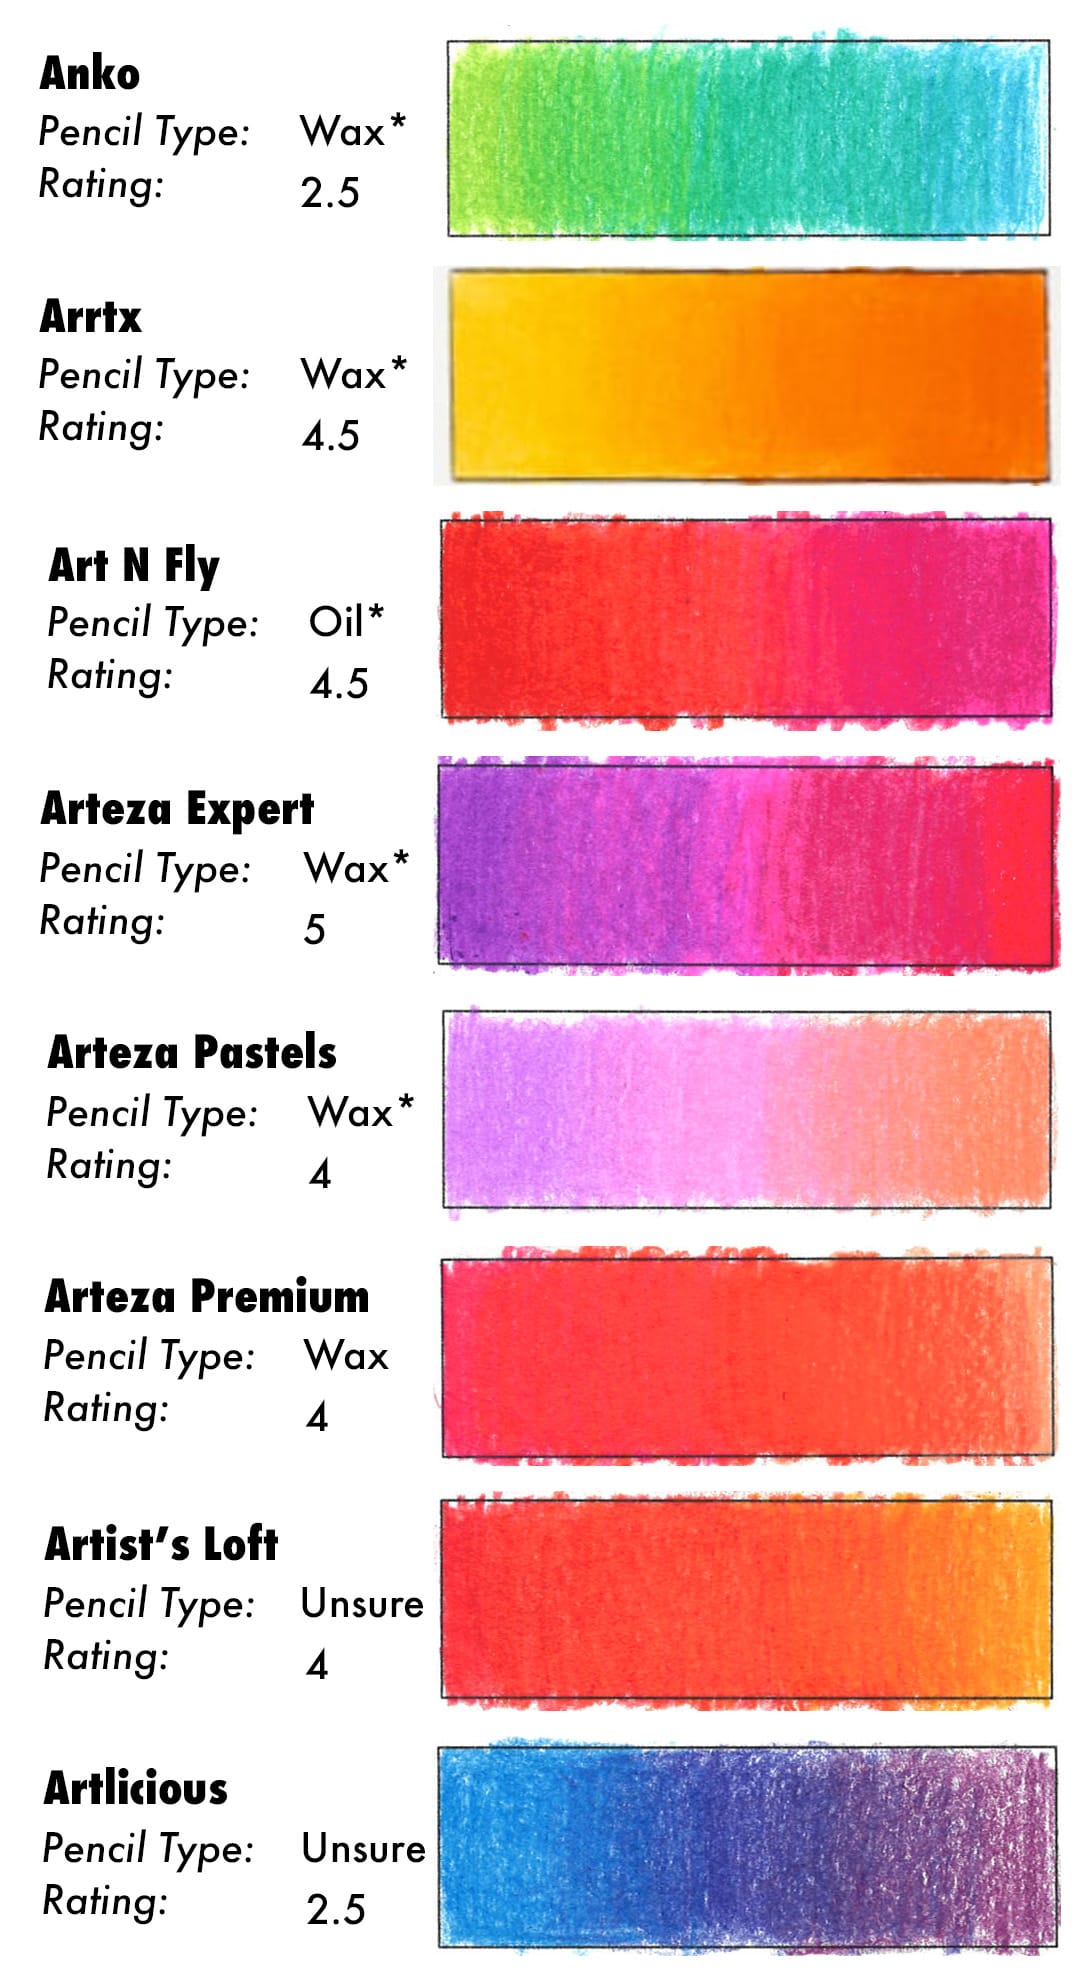 Colored Pencil Blending Results for Anko, Arrtx, Art N Fly, Arteza Expert, Arteza Pastels, Arteza Premium, Artist's Loft, and Artlicious.